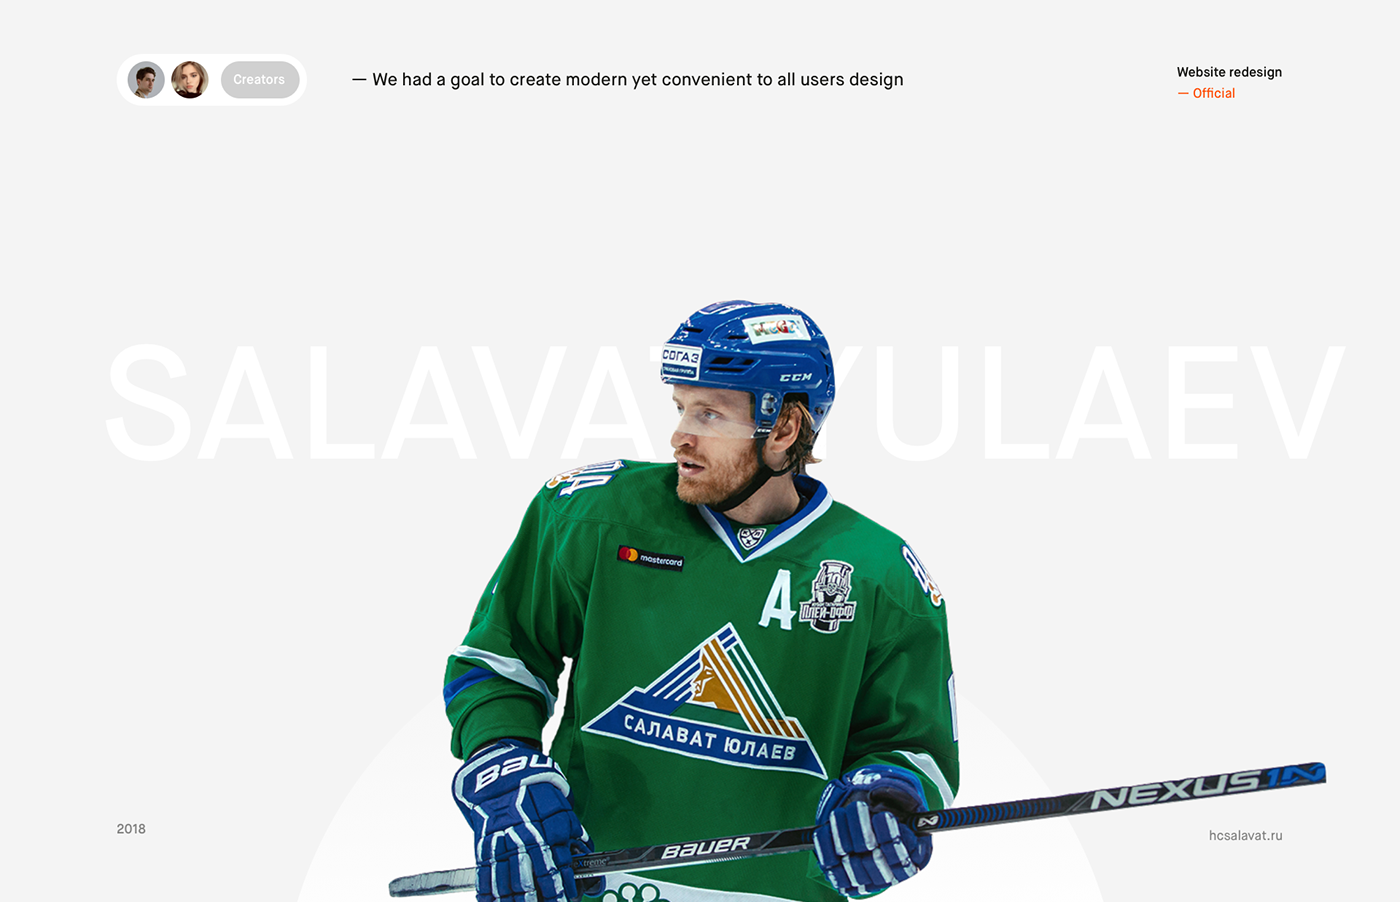 sport hockey Salavatyulaev Web Website uiux desktop